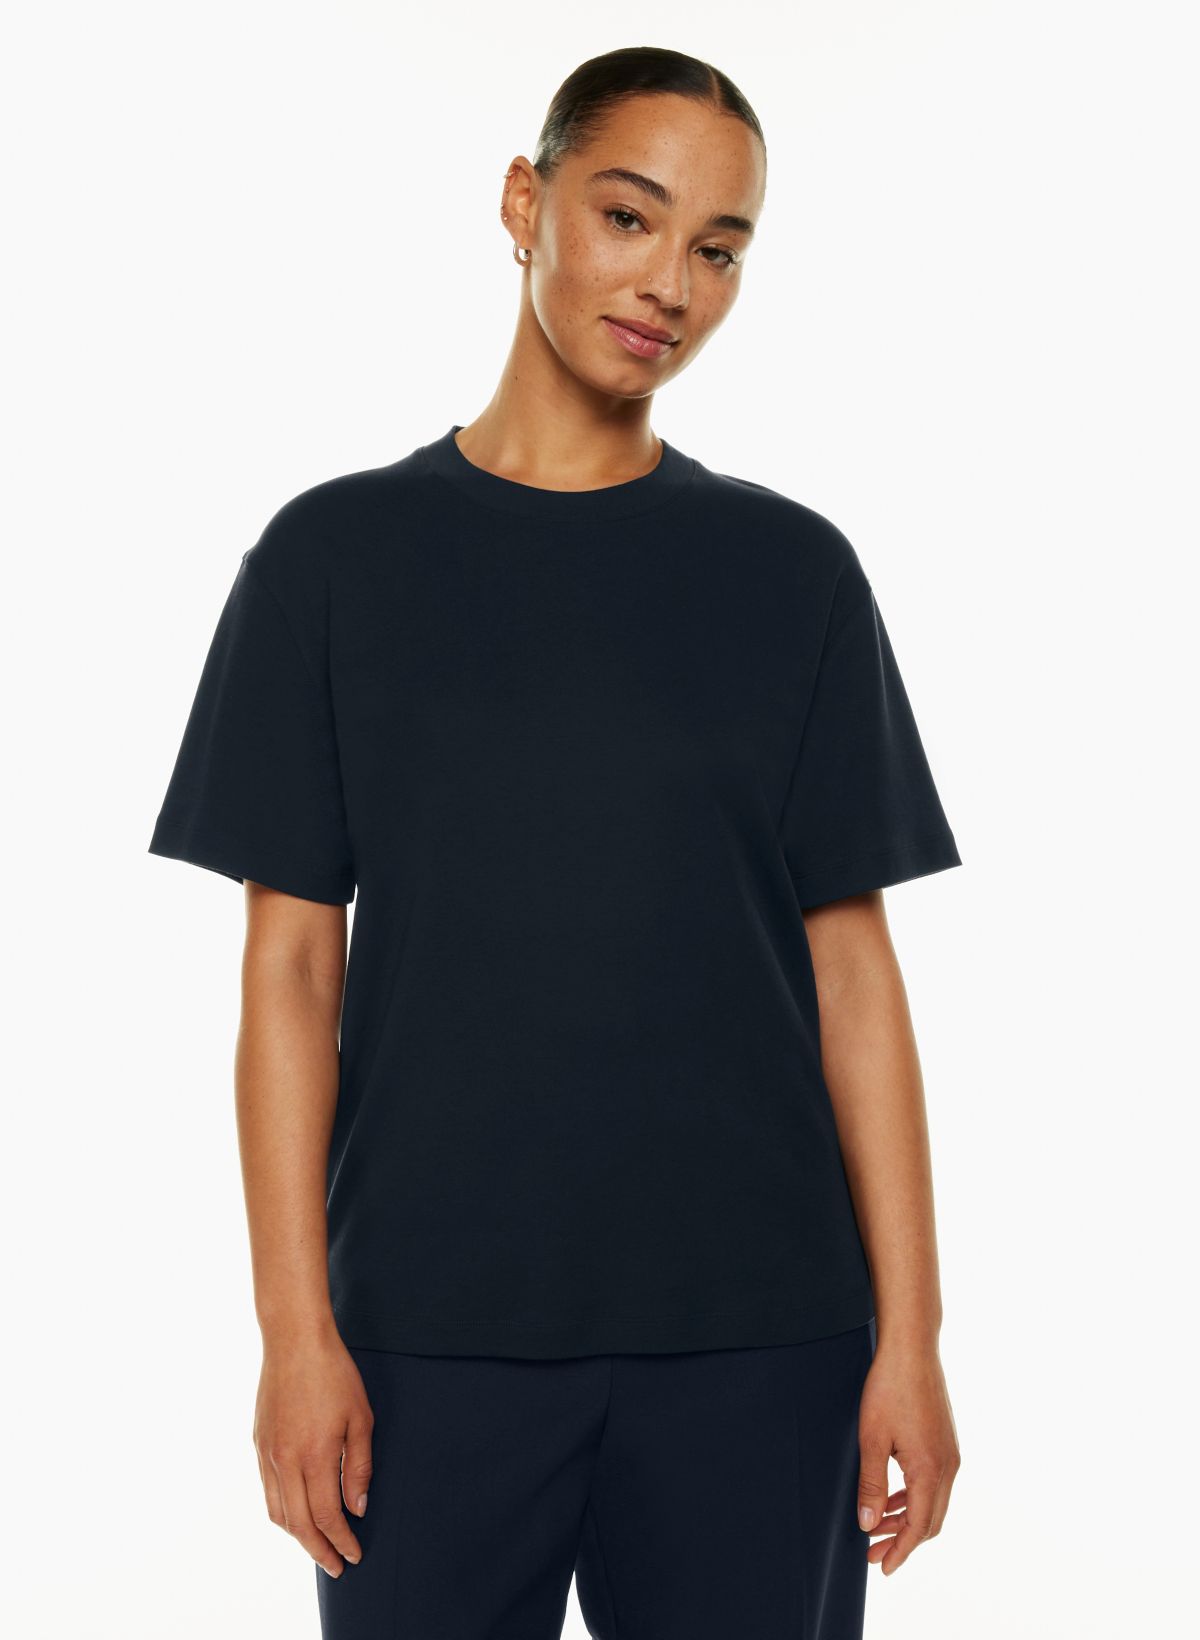 Babaton Women's Pegasus T-Shirt in Dark Night Navy Size Small